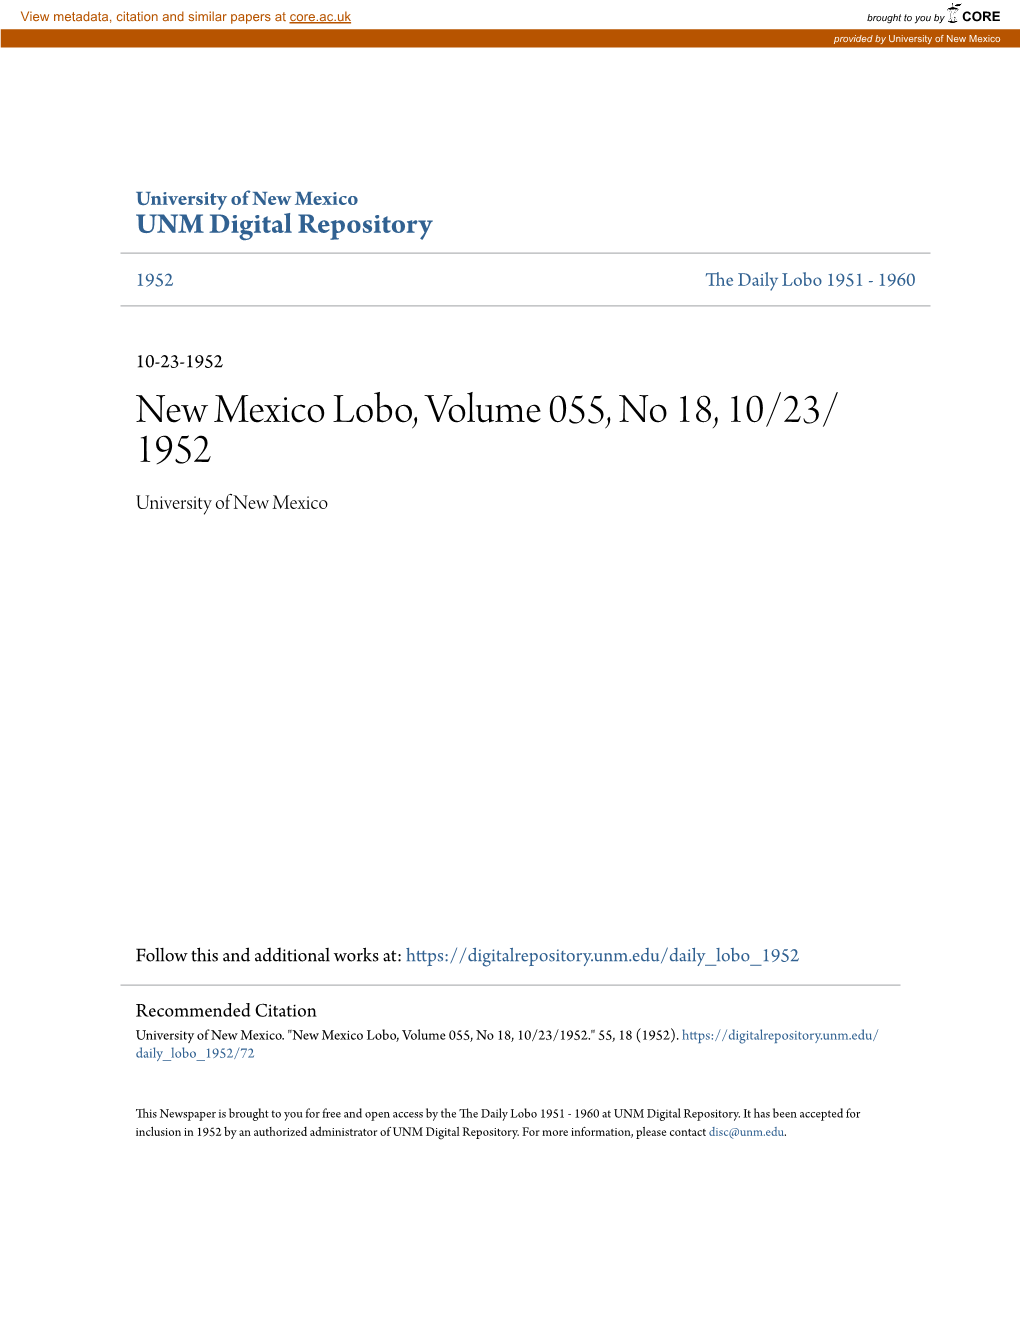 New Mexico Lobo, Volume 055, No 18, 10/23/1952." 55, 18 (1952)